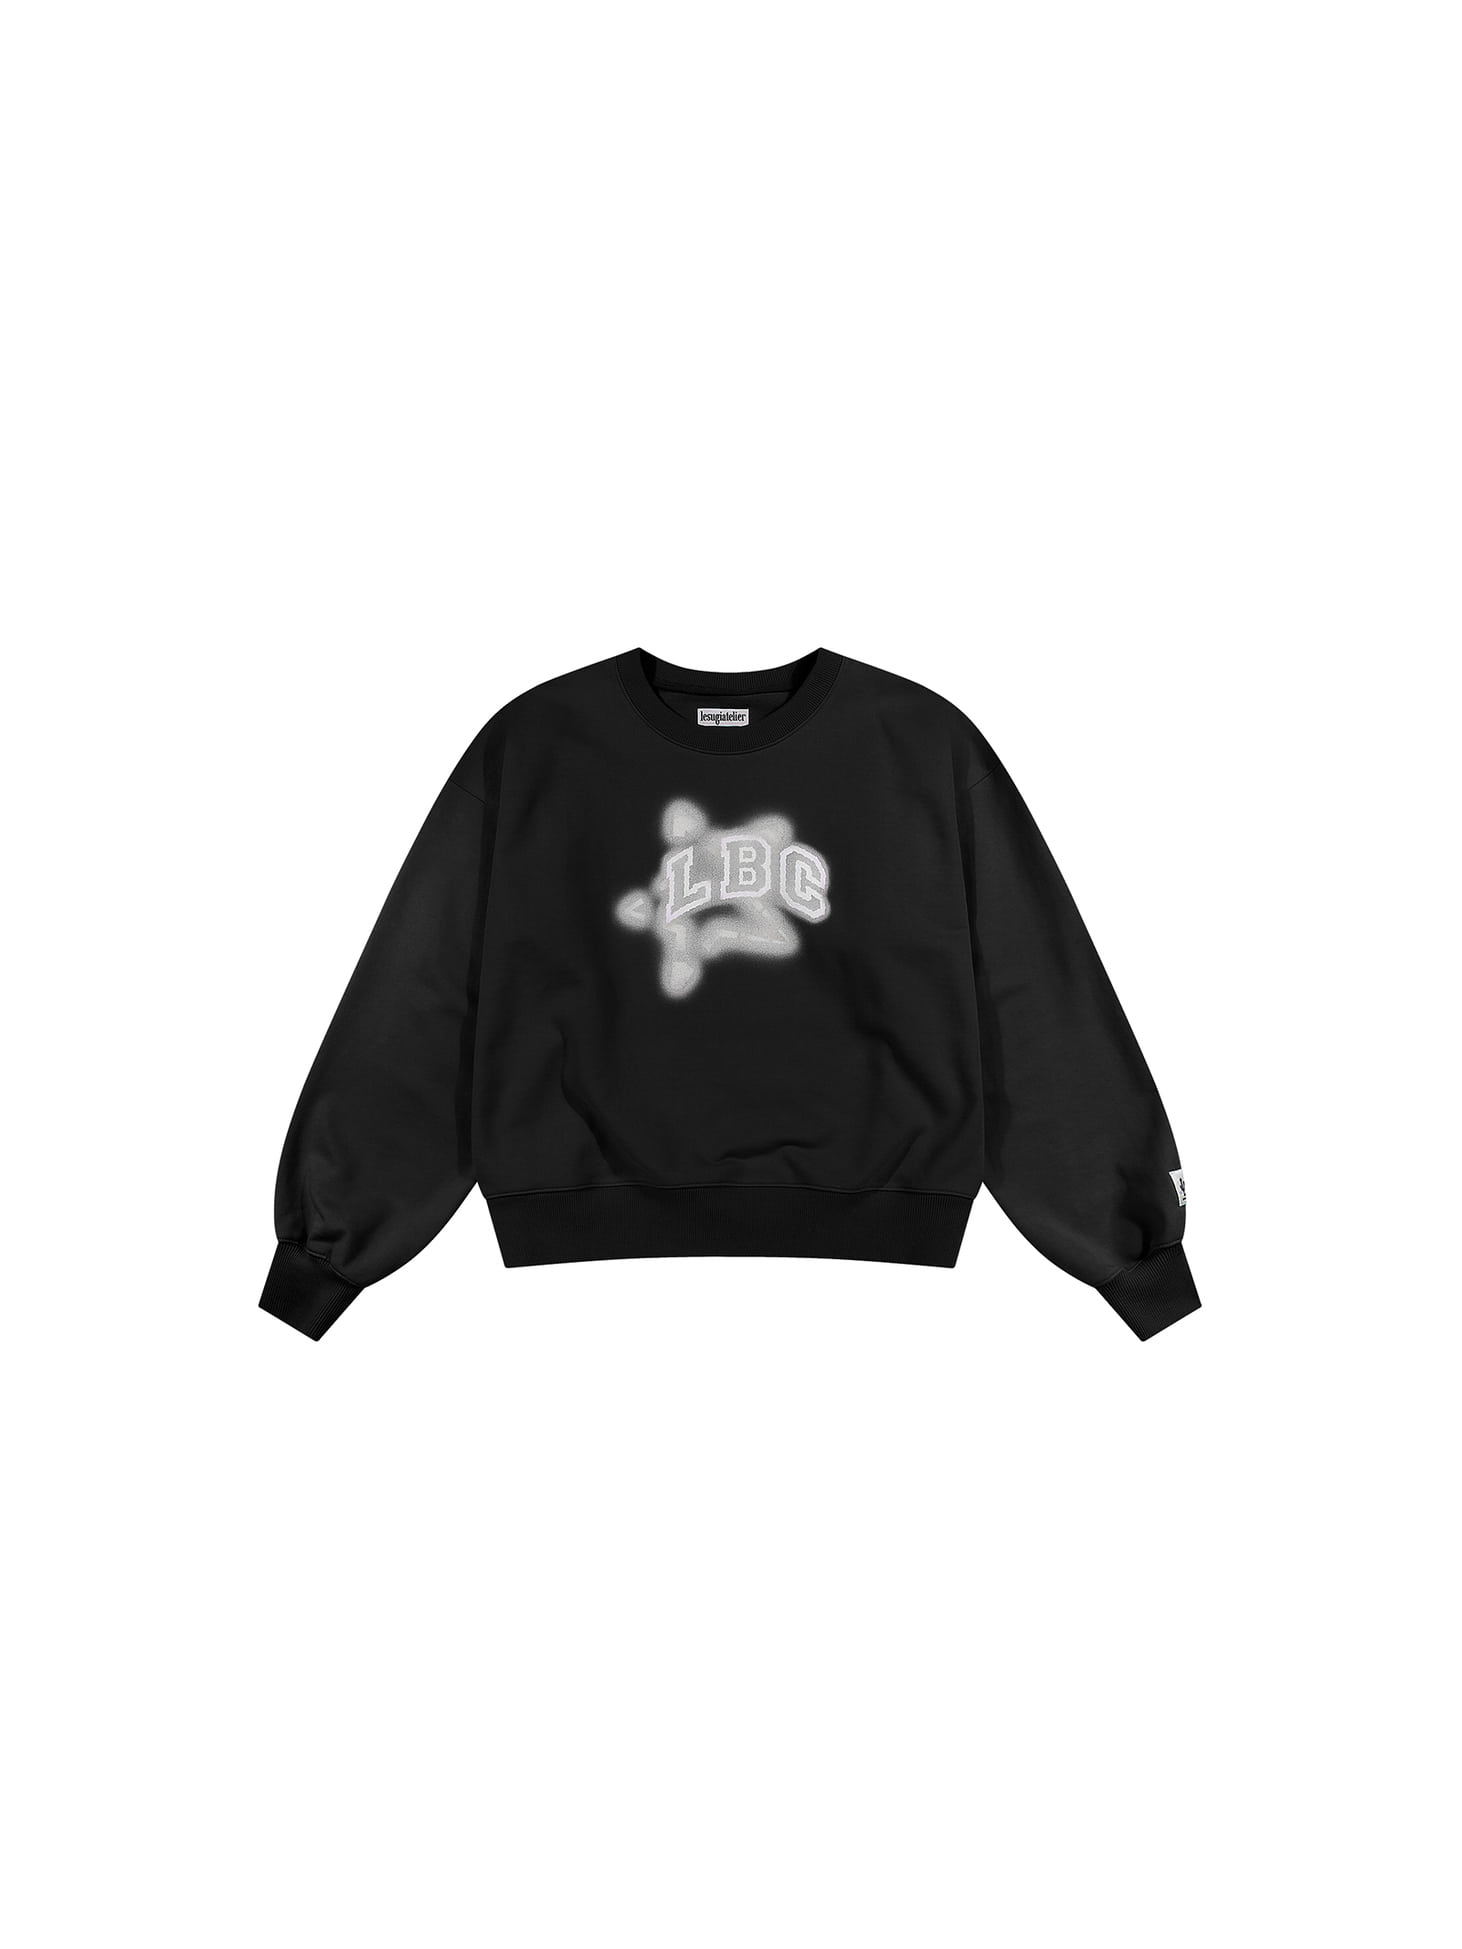 Star LBC sweatshirt / Black